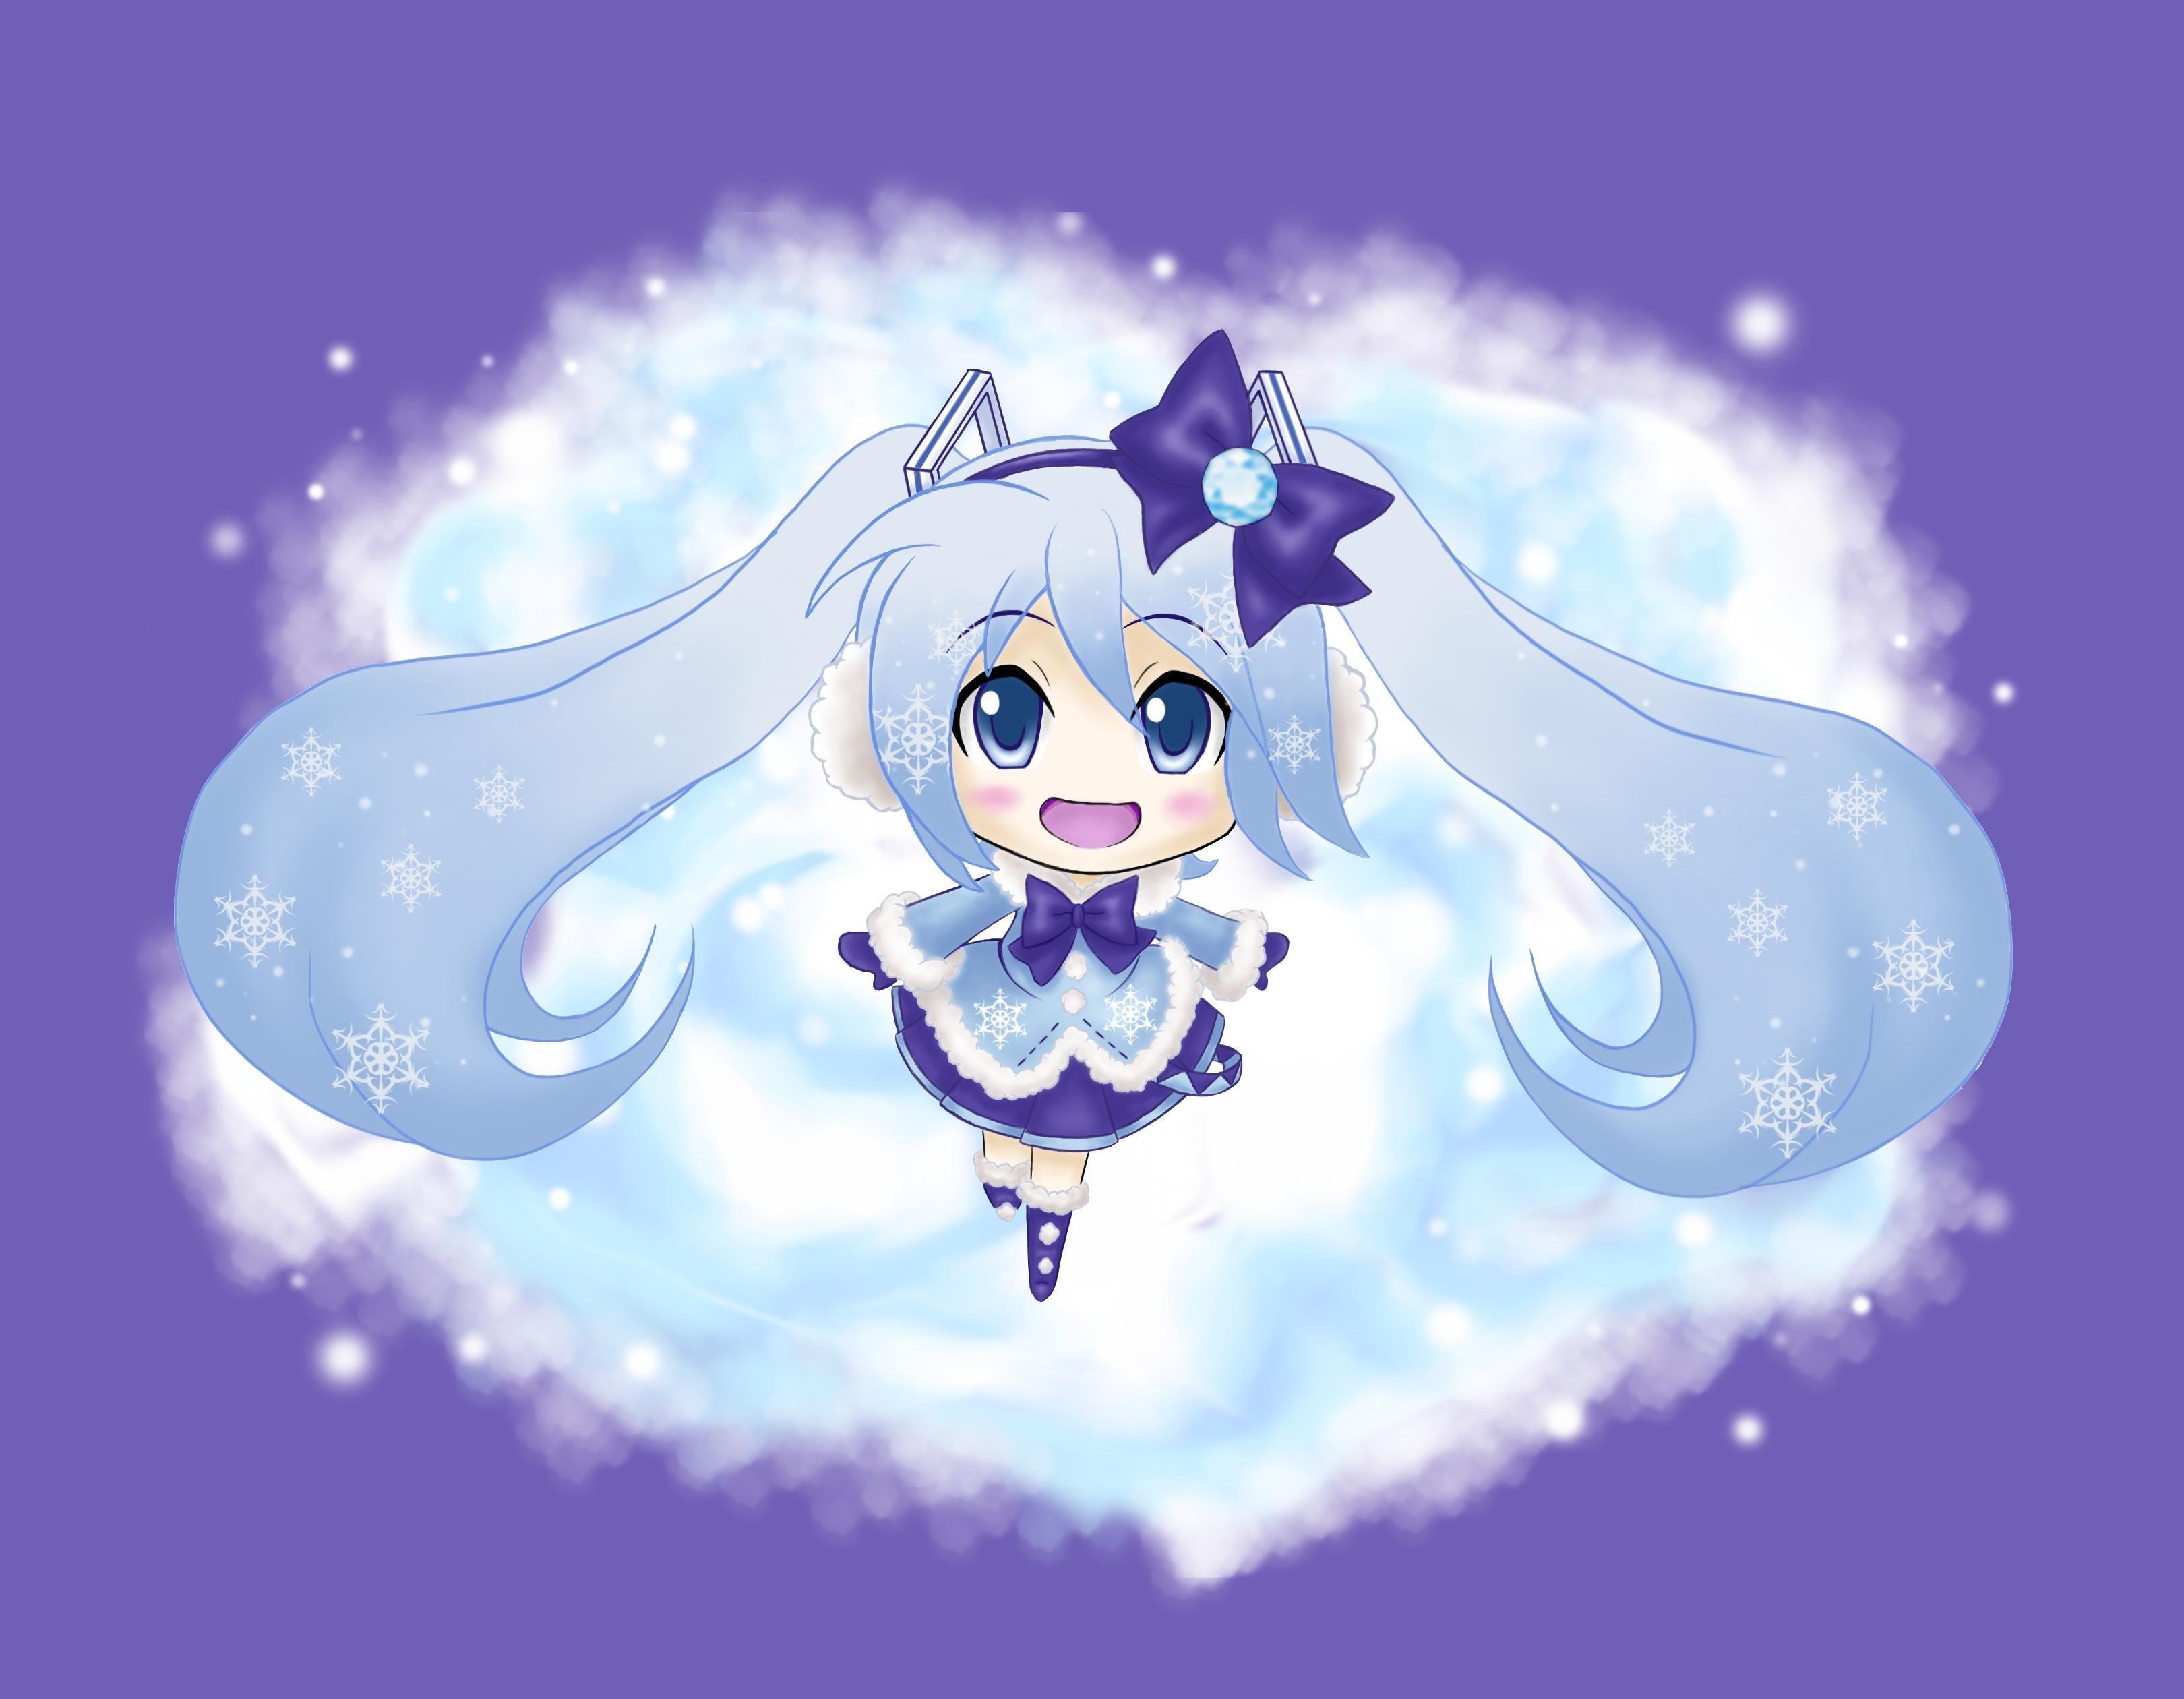 Snow Miku 2015 [Snowflake Flower]